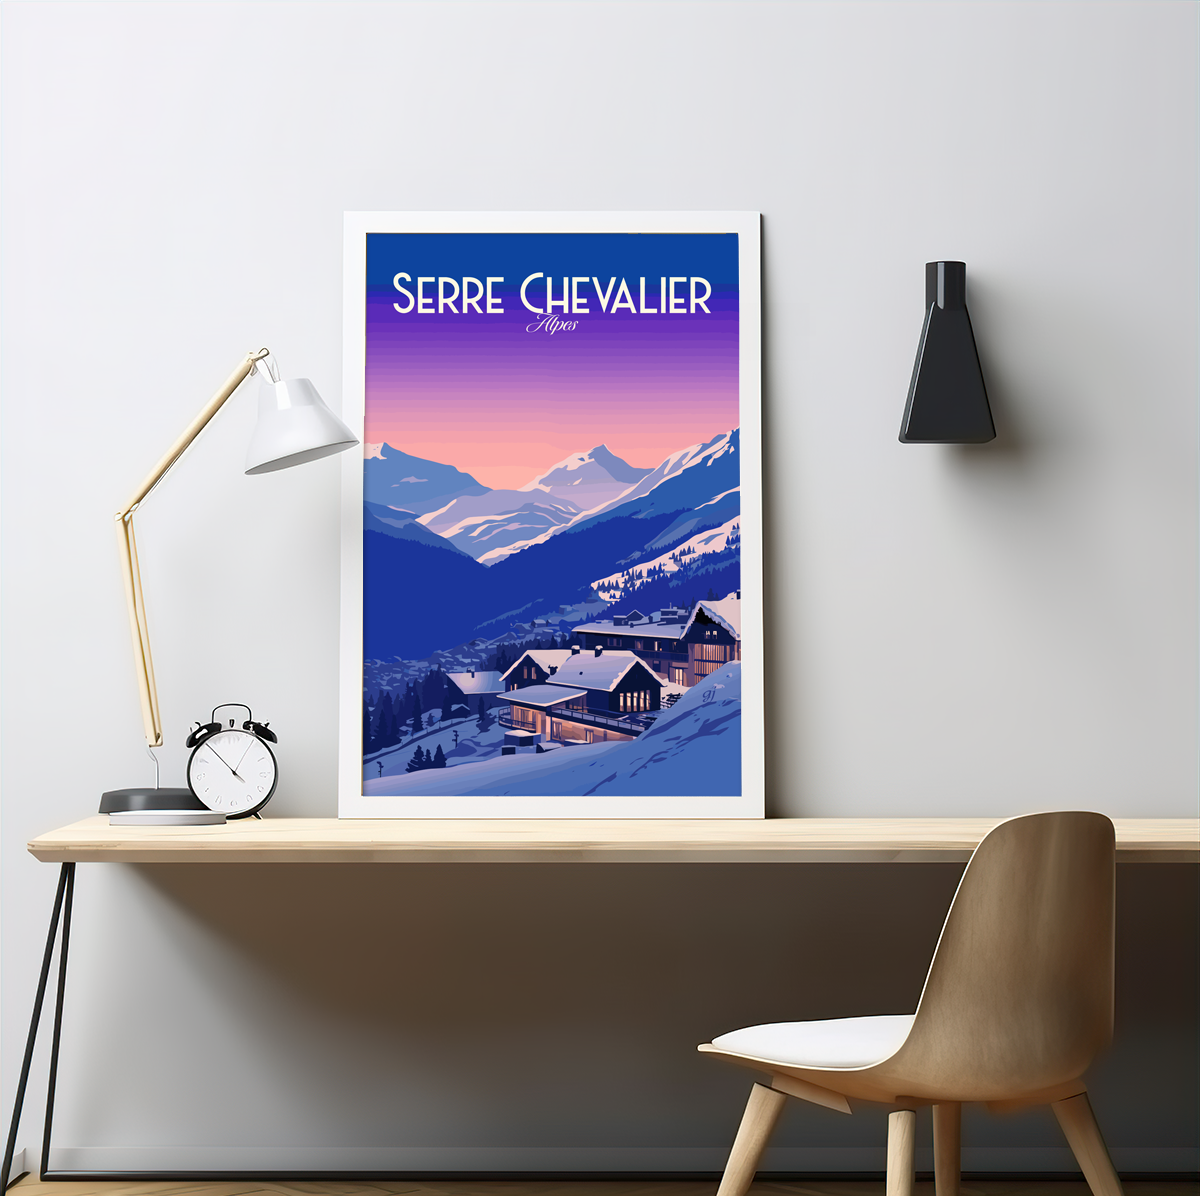 Serre Chevalier poster by bon voyage design